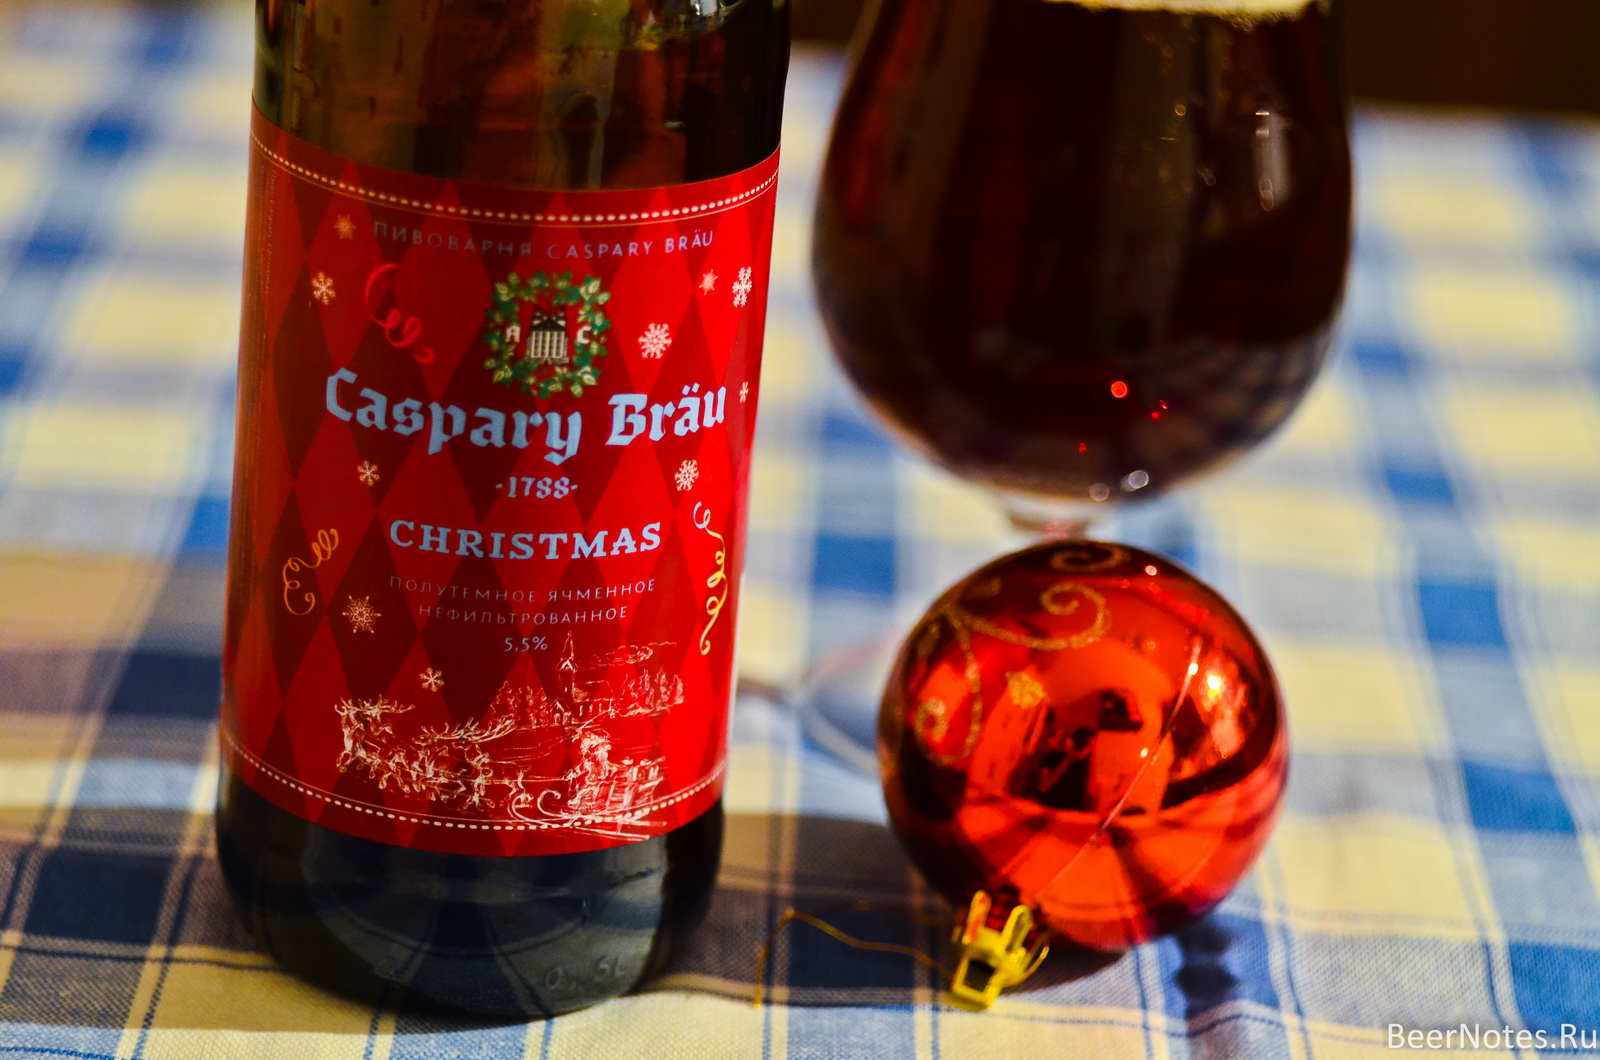 Caspary Bräu Christmas3